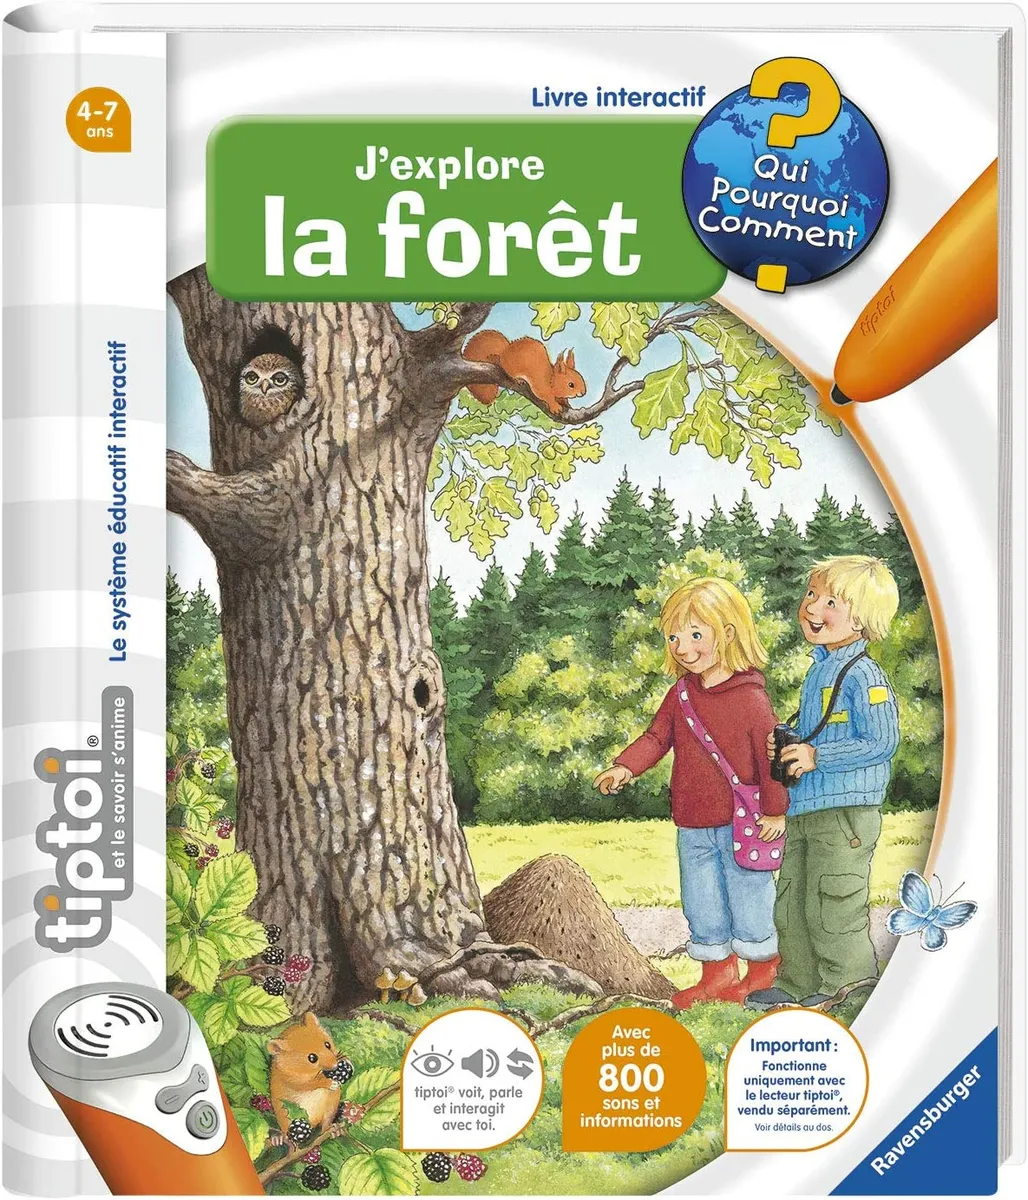 Livre interactif- J'explore la forêt